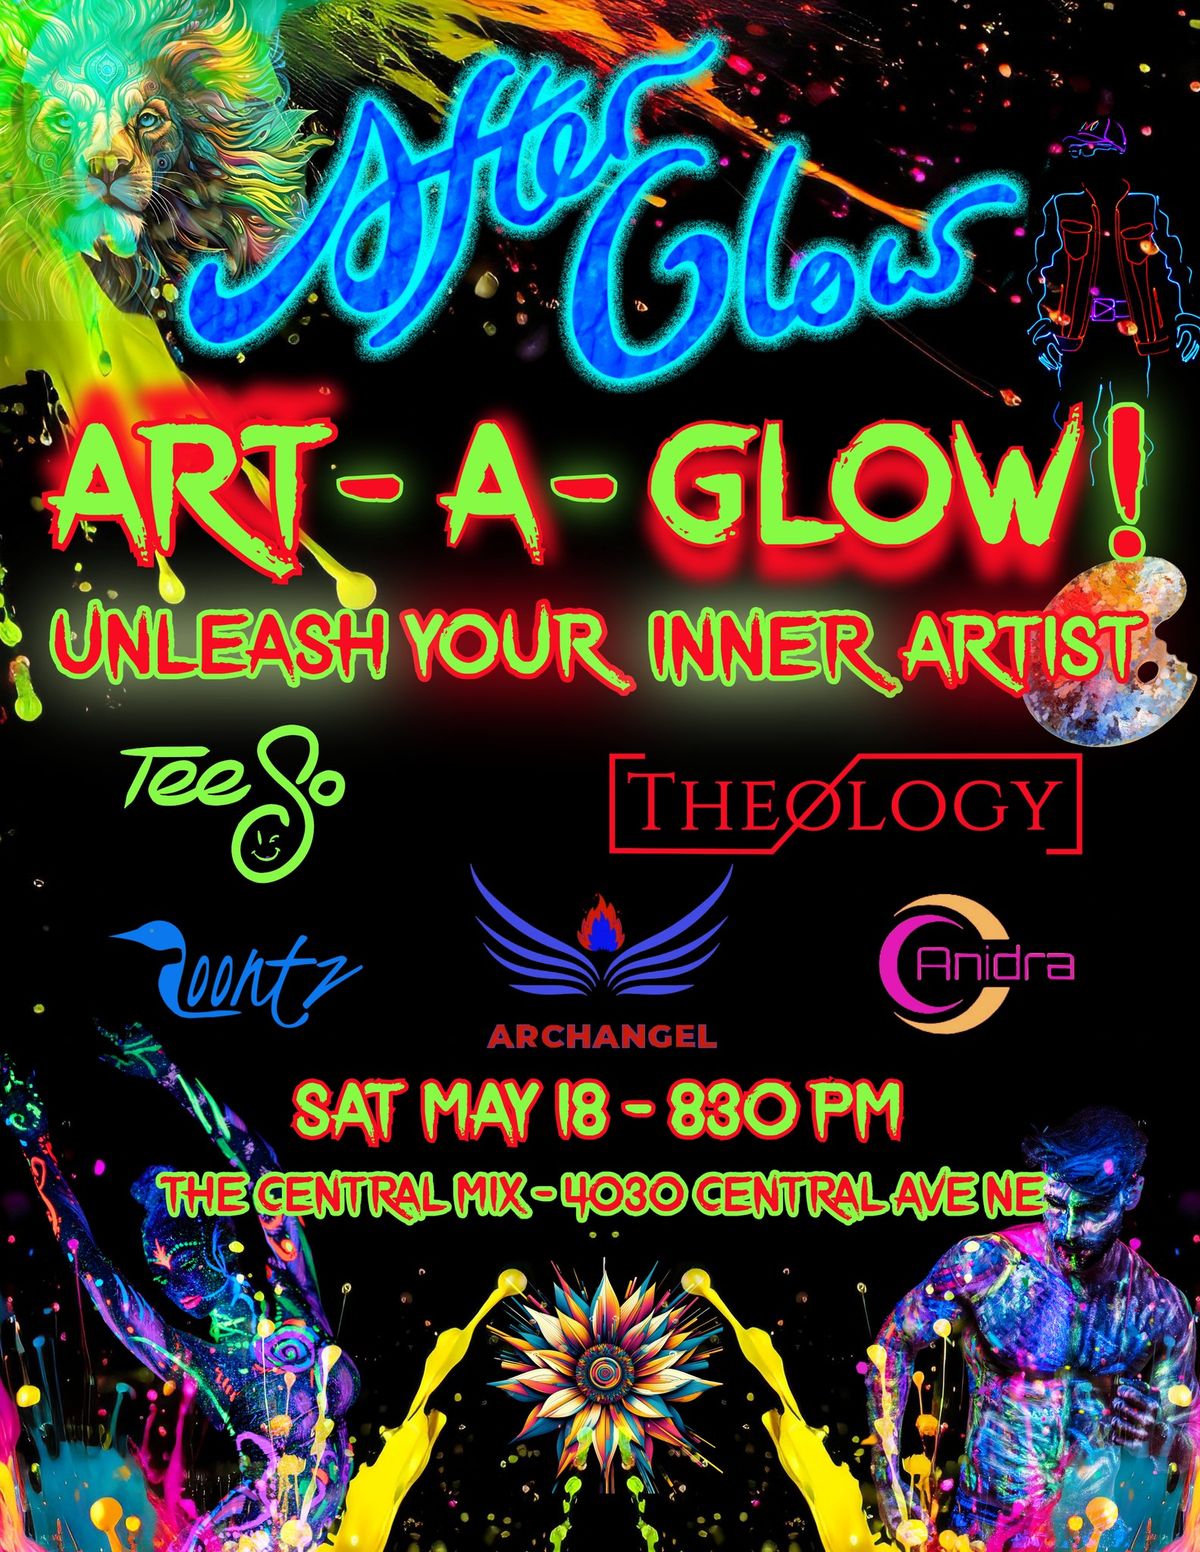 AfterGlow - Art-a-Glow!